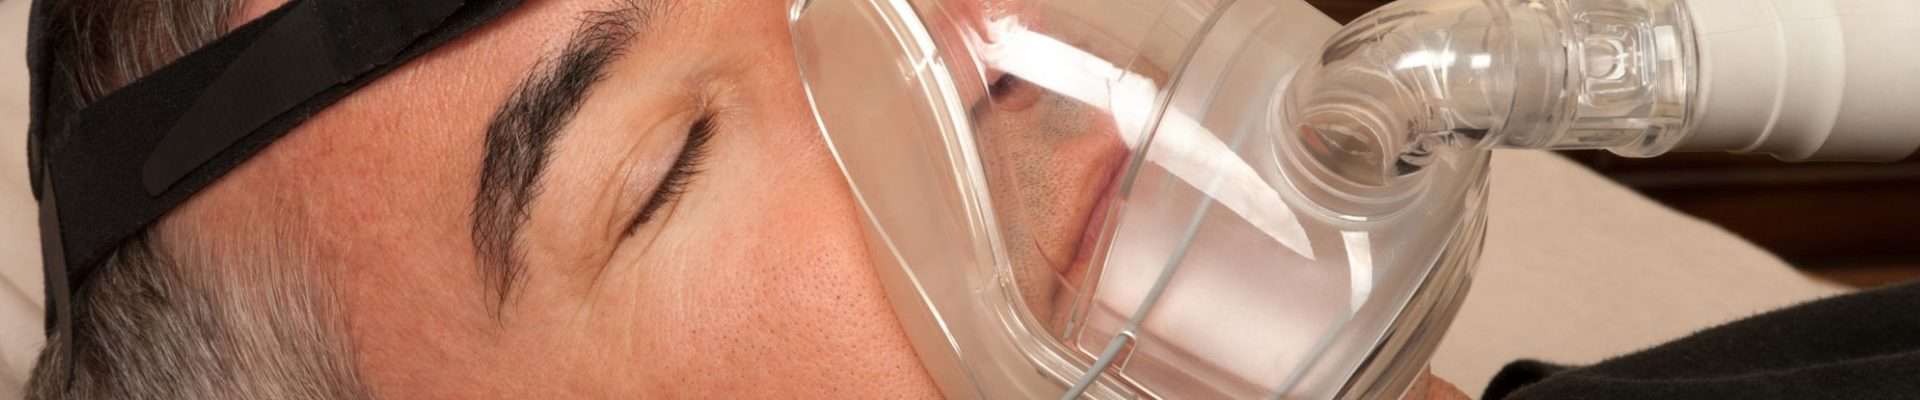 Man sleeping with a CPAP device to treat sleep apnea.